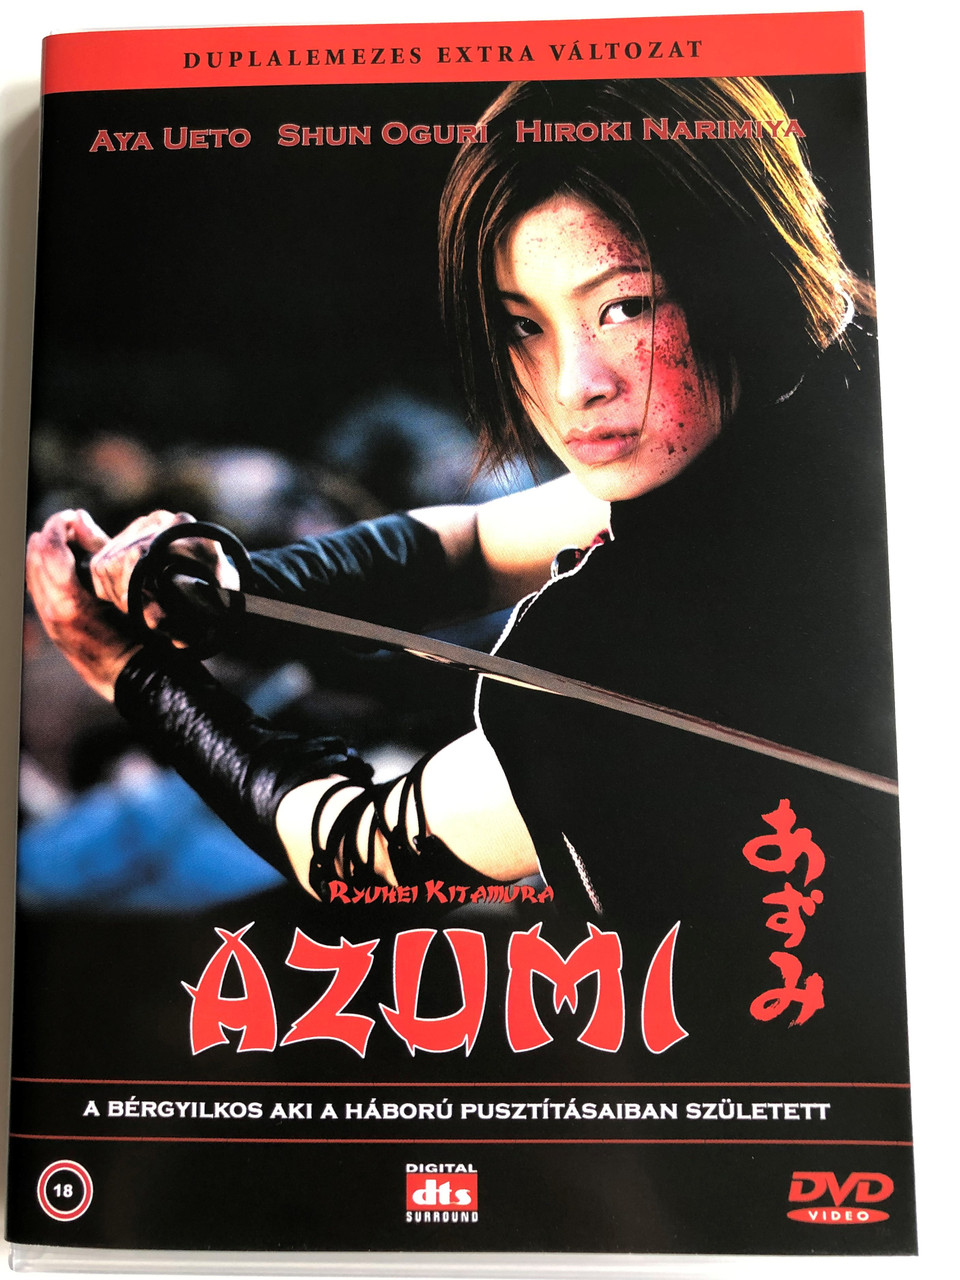 Azumi 2DVD 2003 Duplalemezes extra változat / Directed by Ryuhei Kitamura /  Starring: Aya Ueto, Yoshio Harada, Aya Okamoto, Kazuki Kitamura -  bibleinmylanguage